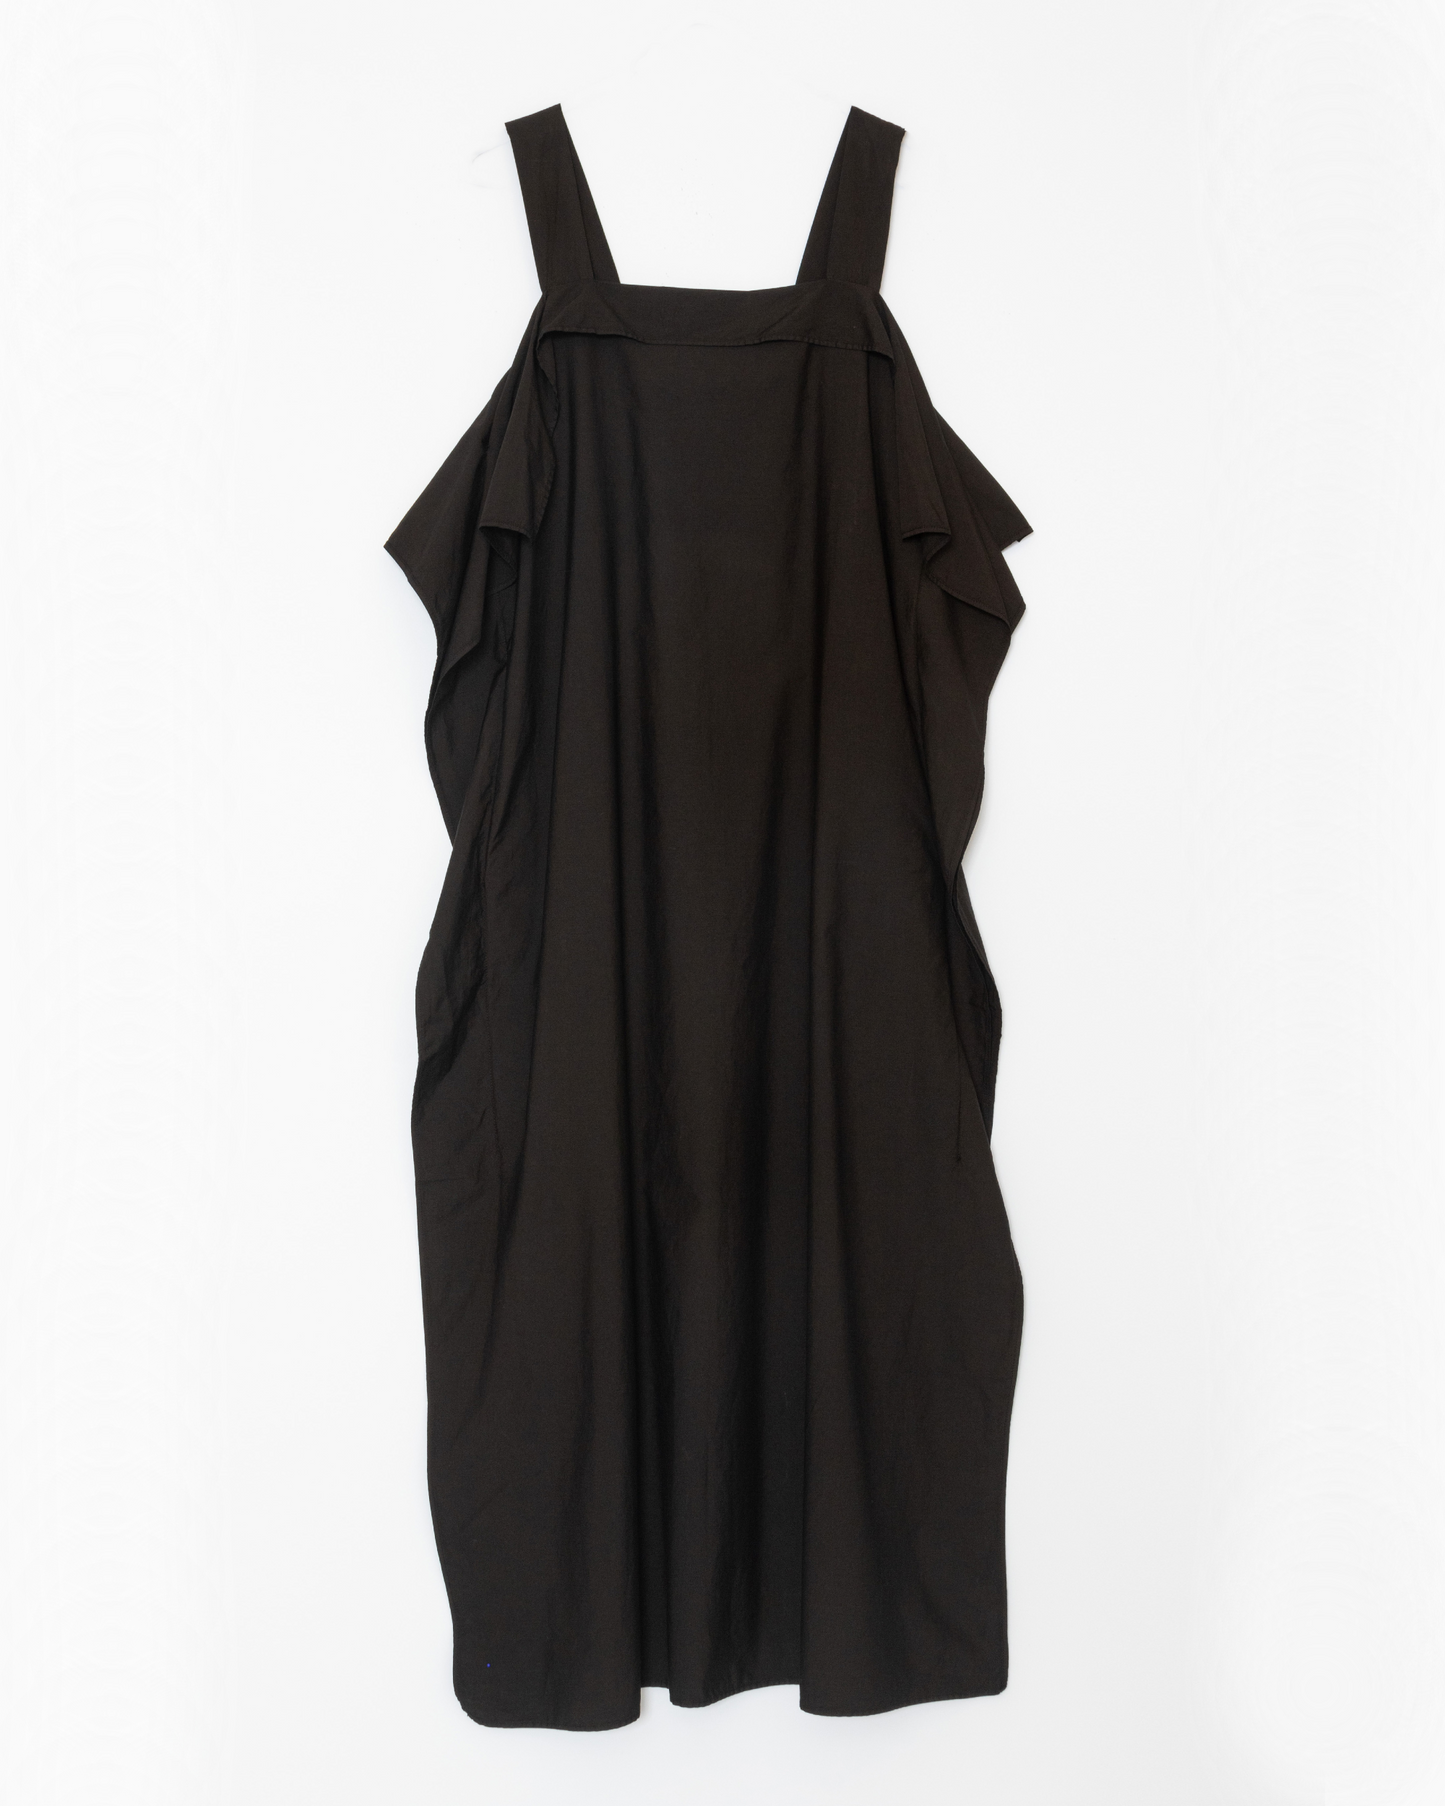 [Whiteread] Dress 14 - Ebony